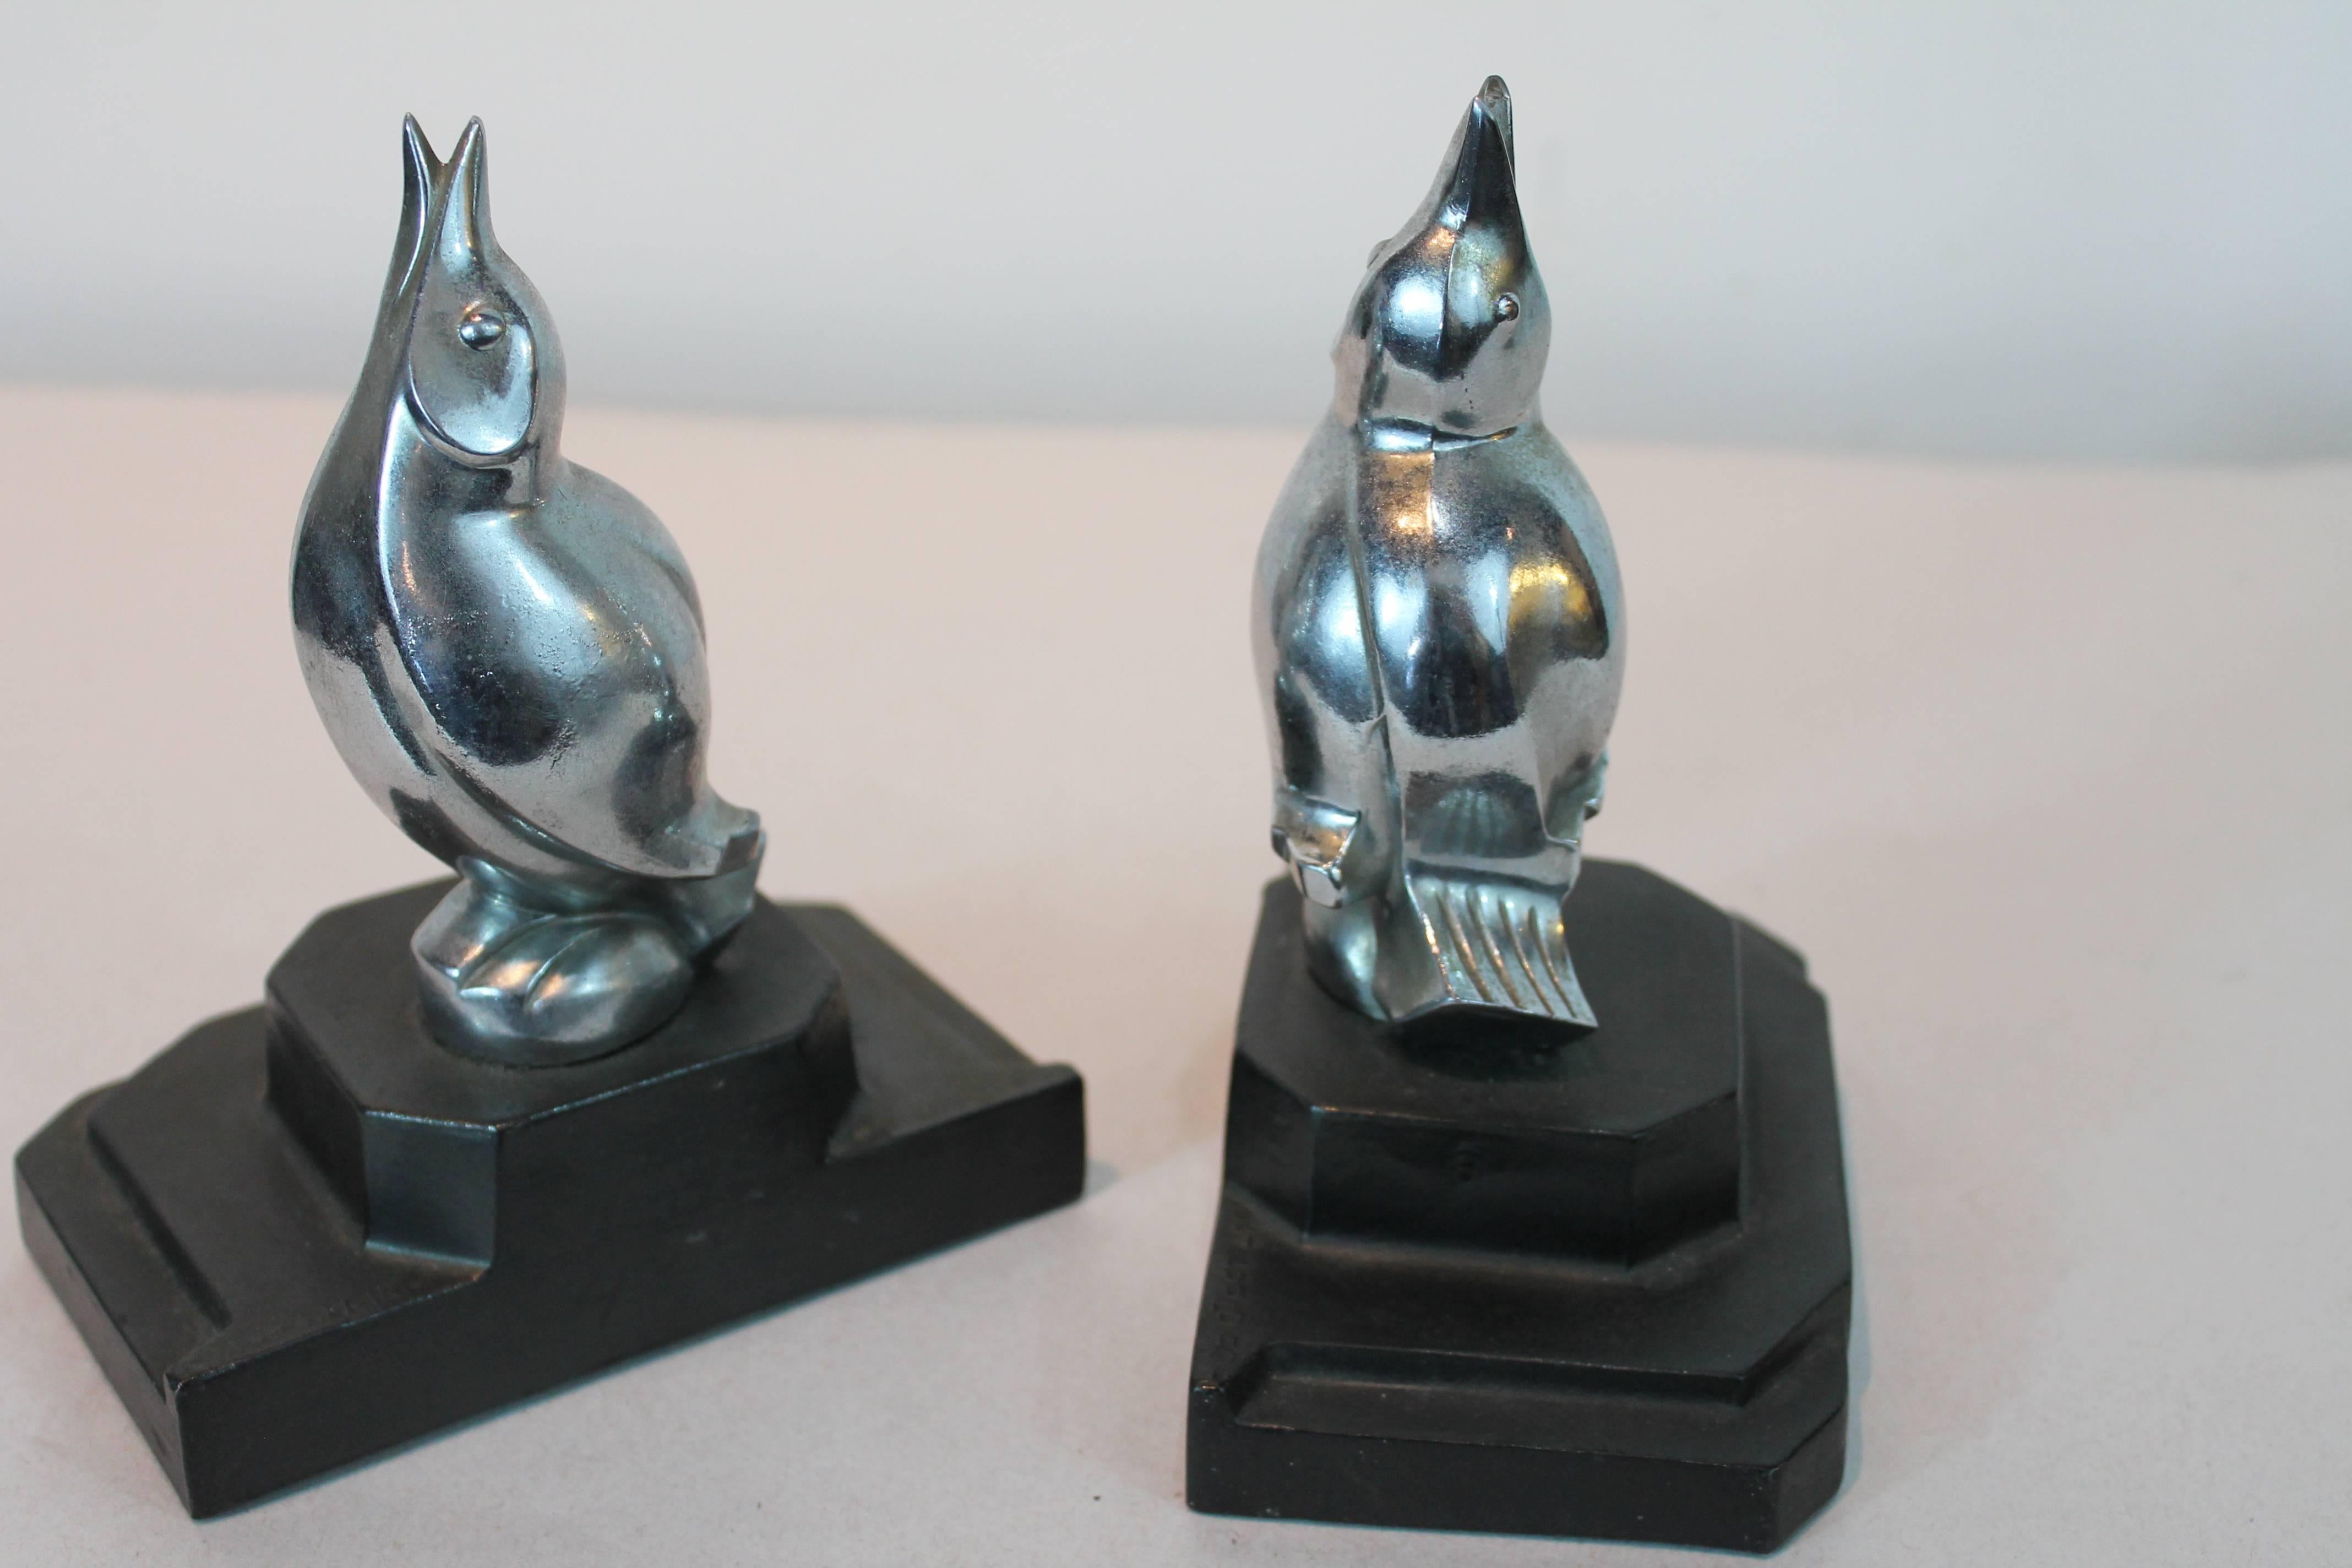 Pair of Art Deco chrome stylized bird bookends on ziggurat cast plinths.
Stamped Frankart.